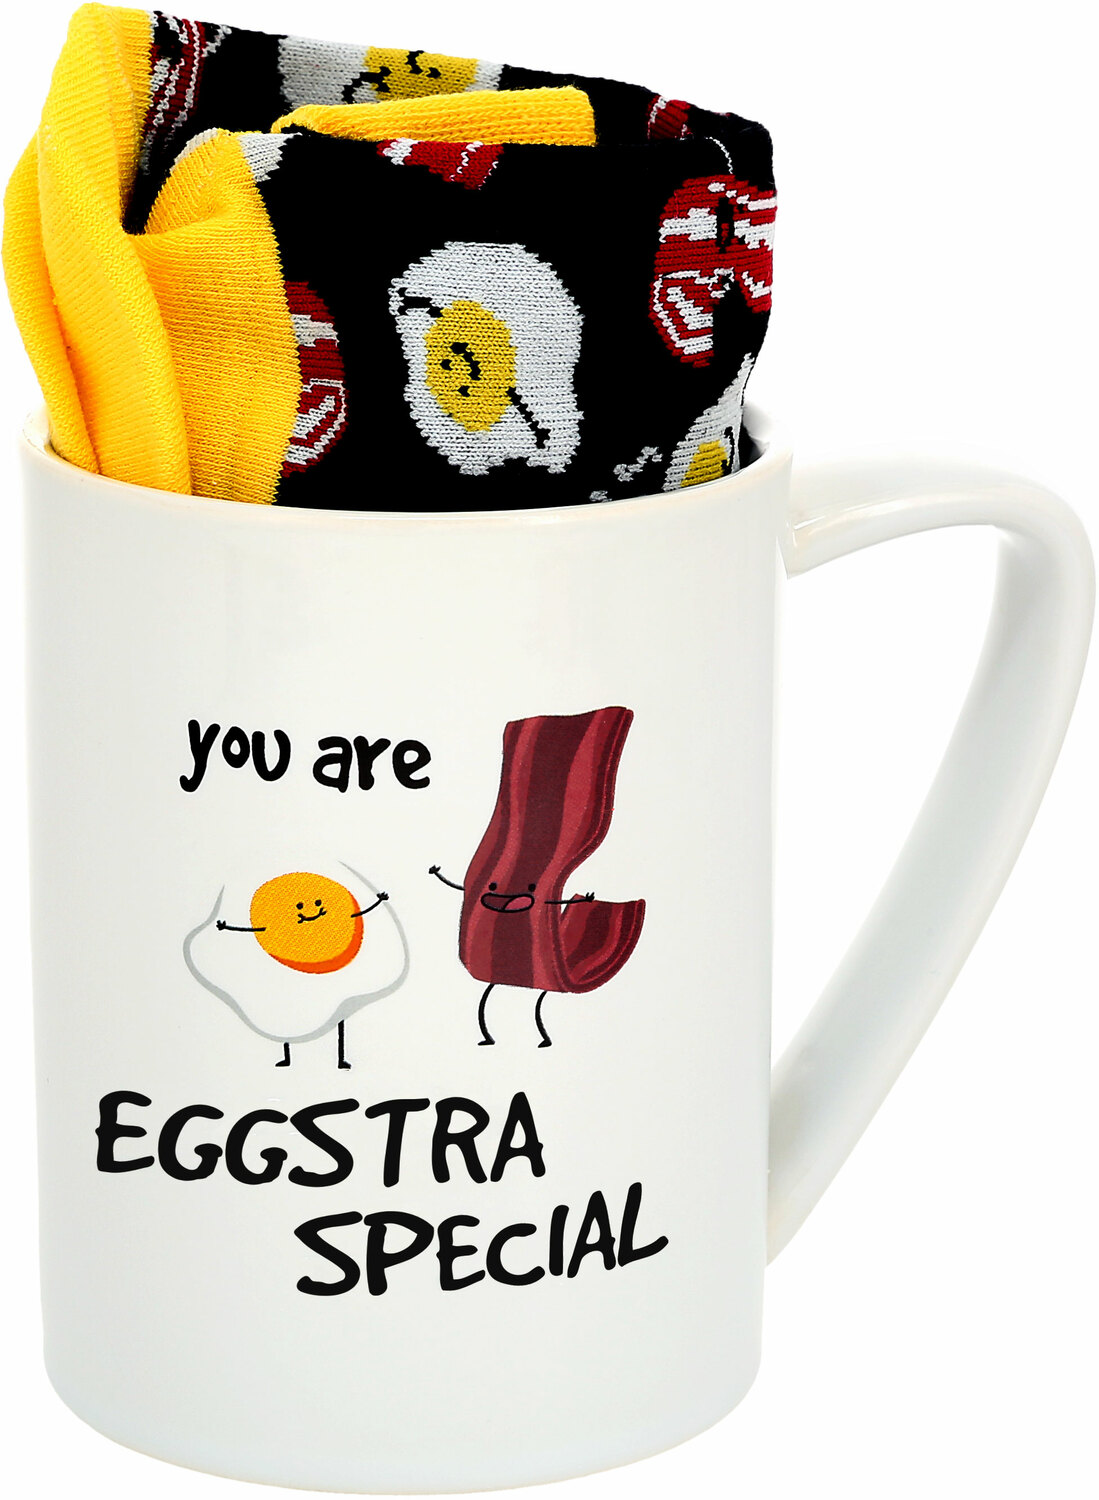 Eggstra Special by Late Night Snacks - Eggstra Special - 18 oz Mug and Sock Set